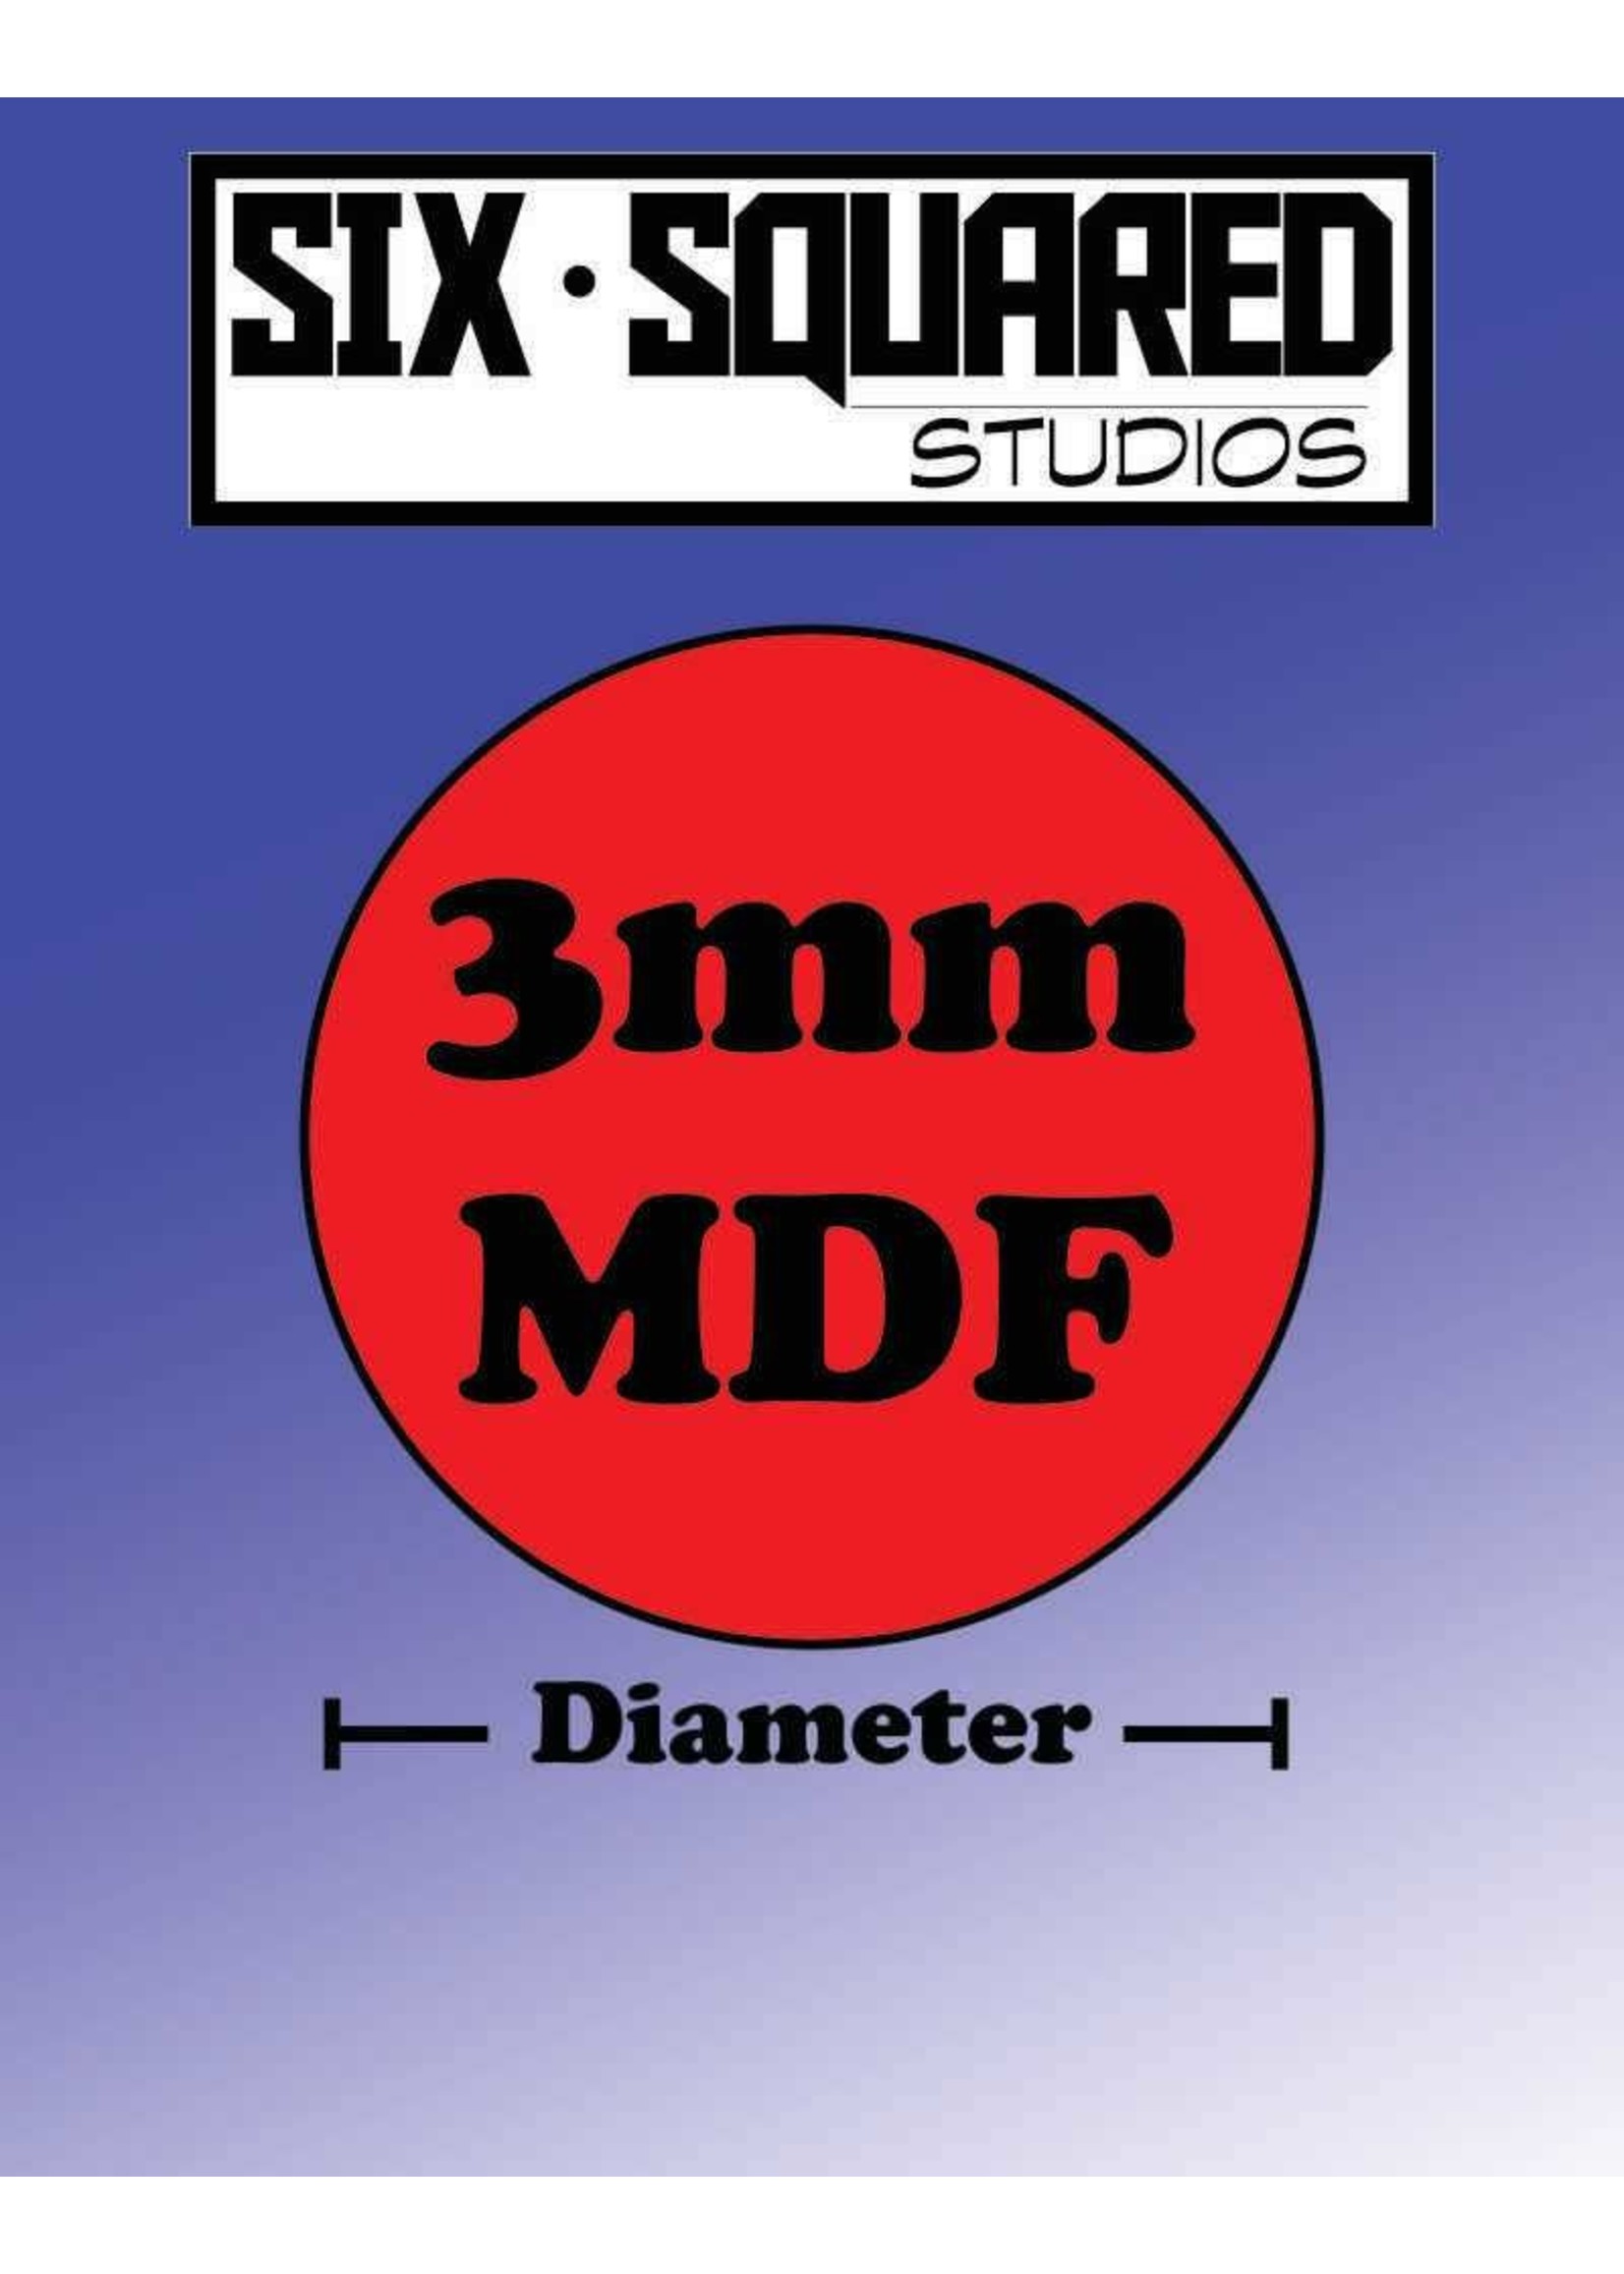 6 Squared Studios 130mm MDF round bases